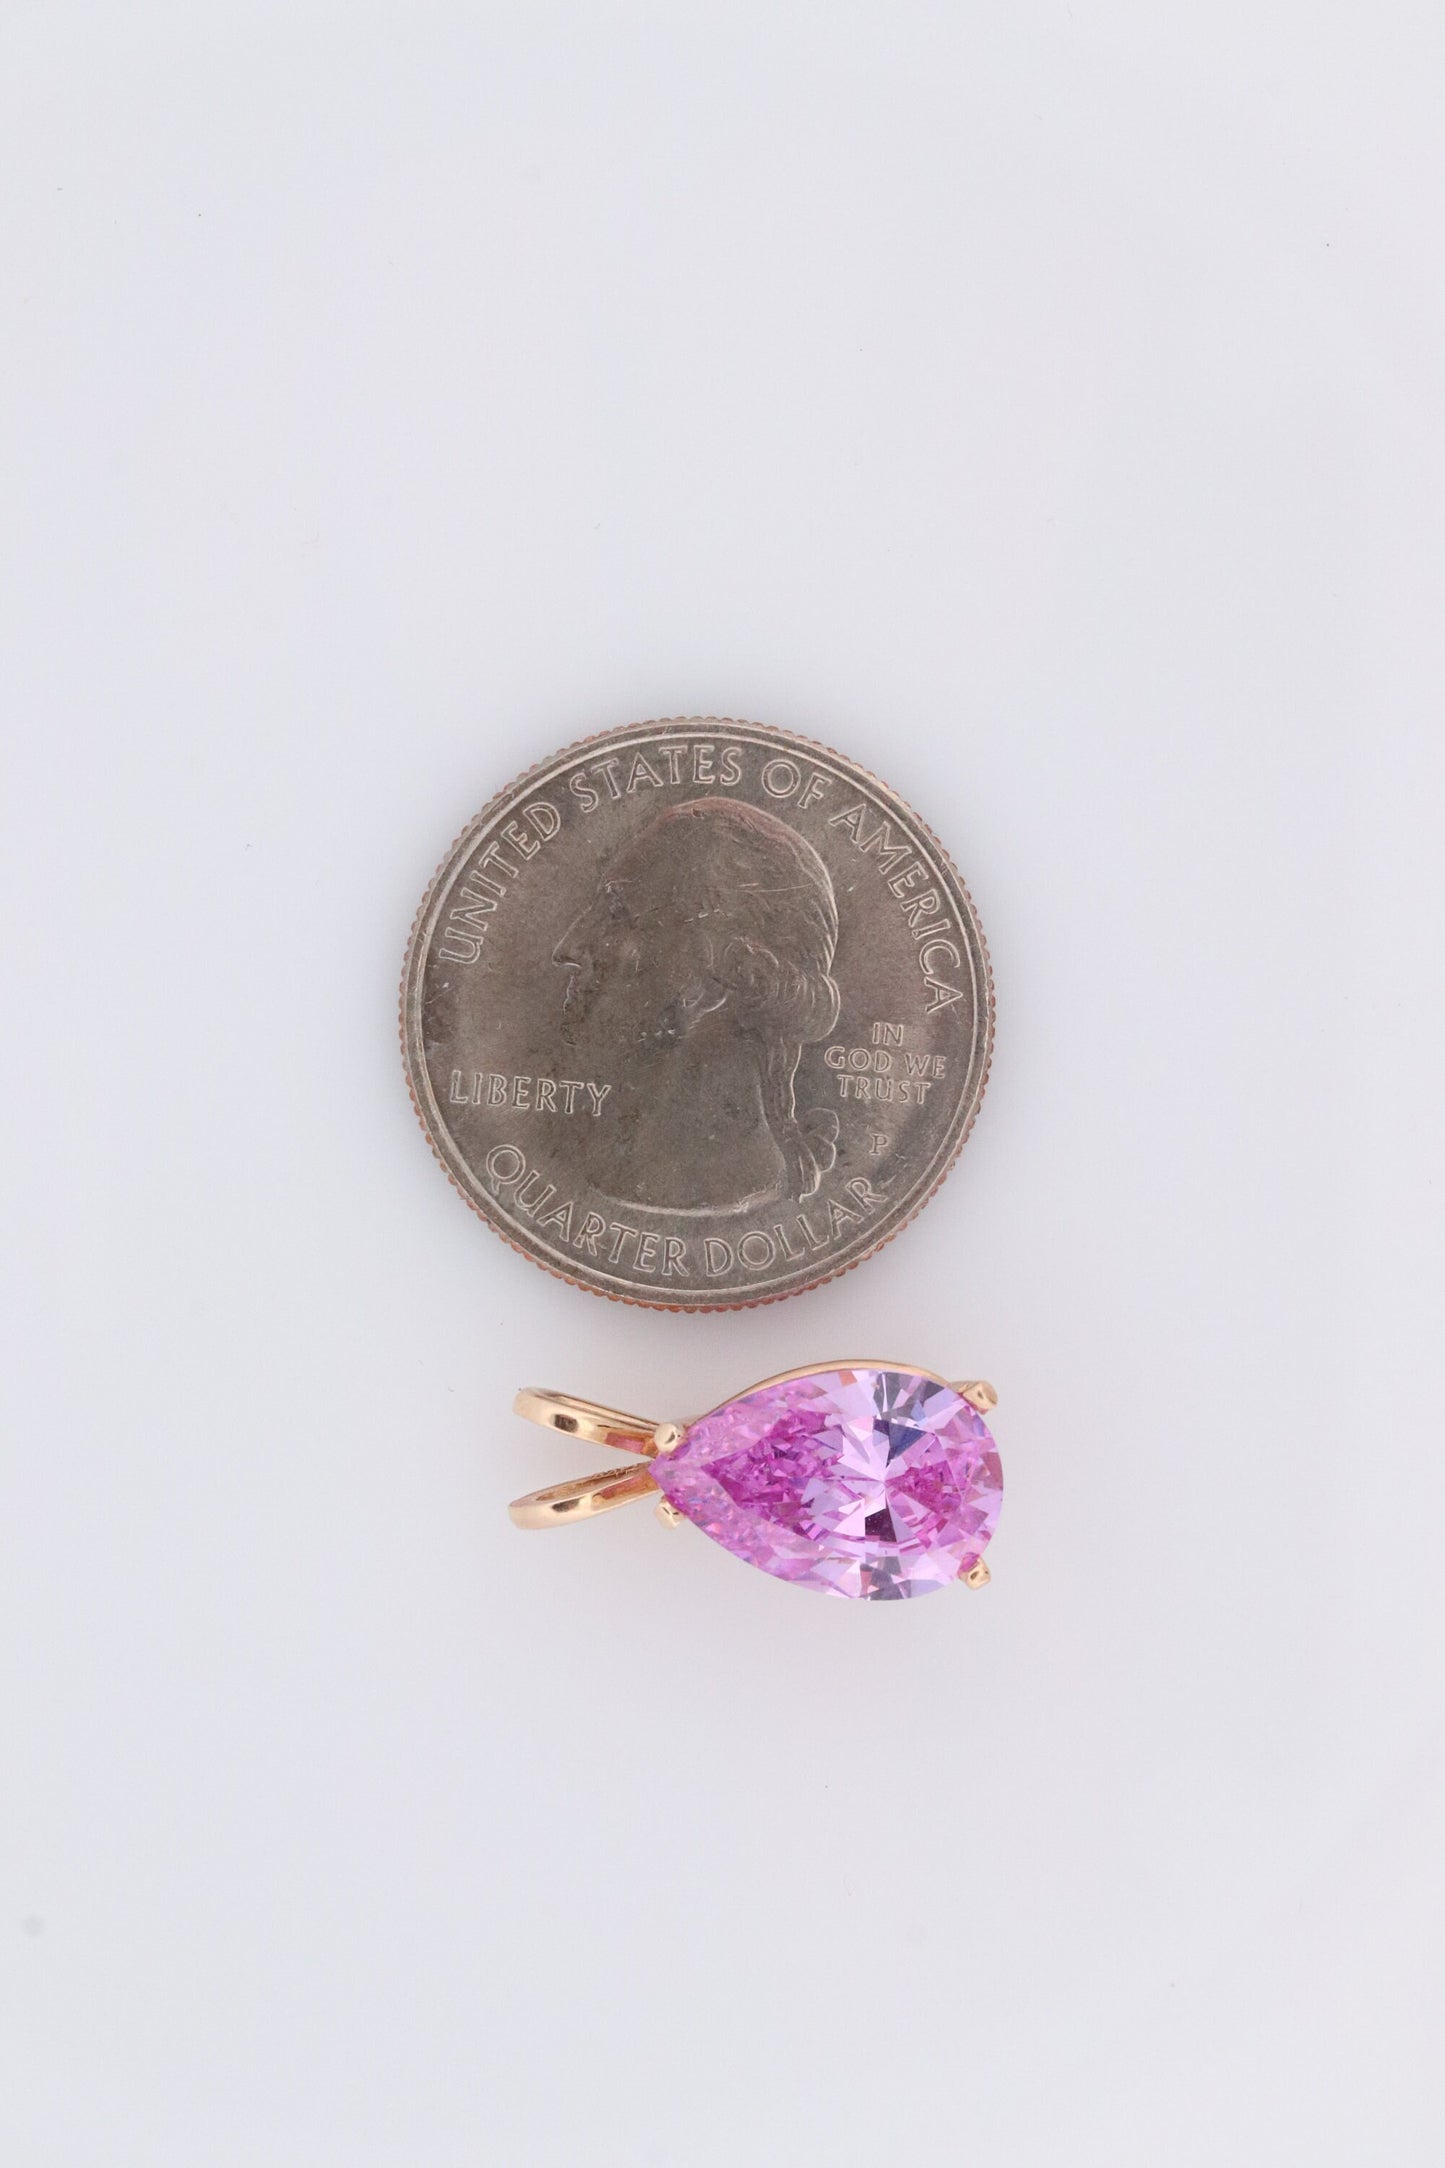 14k PINK Diamond(CZ) Solitaire Pendant. 14k gold Large Pink Pear CZ pendant Gift. st(42)